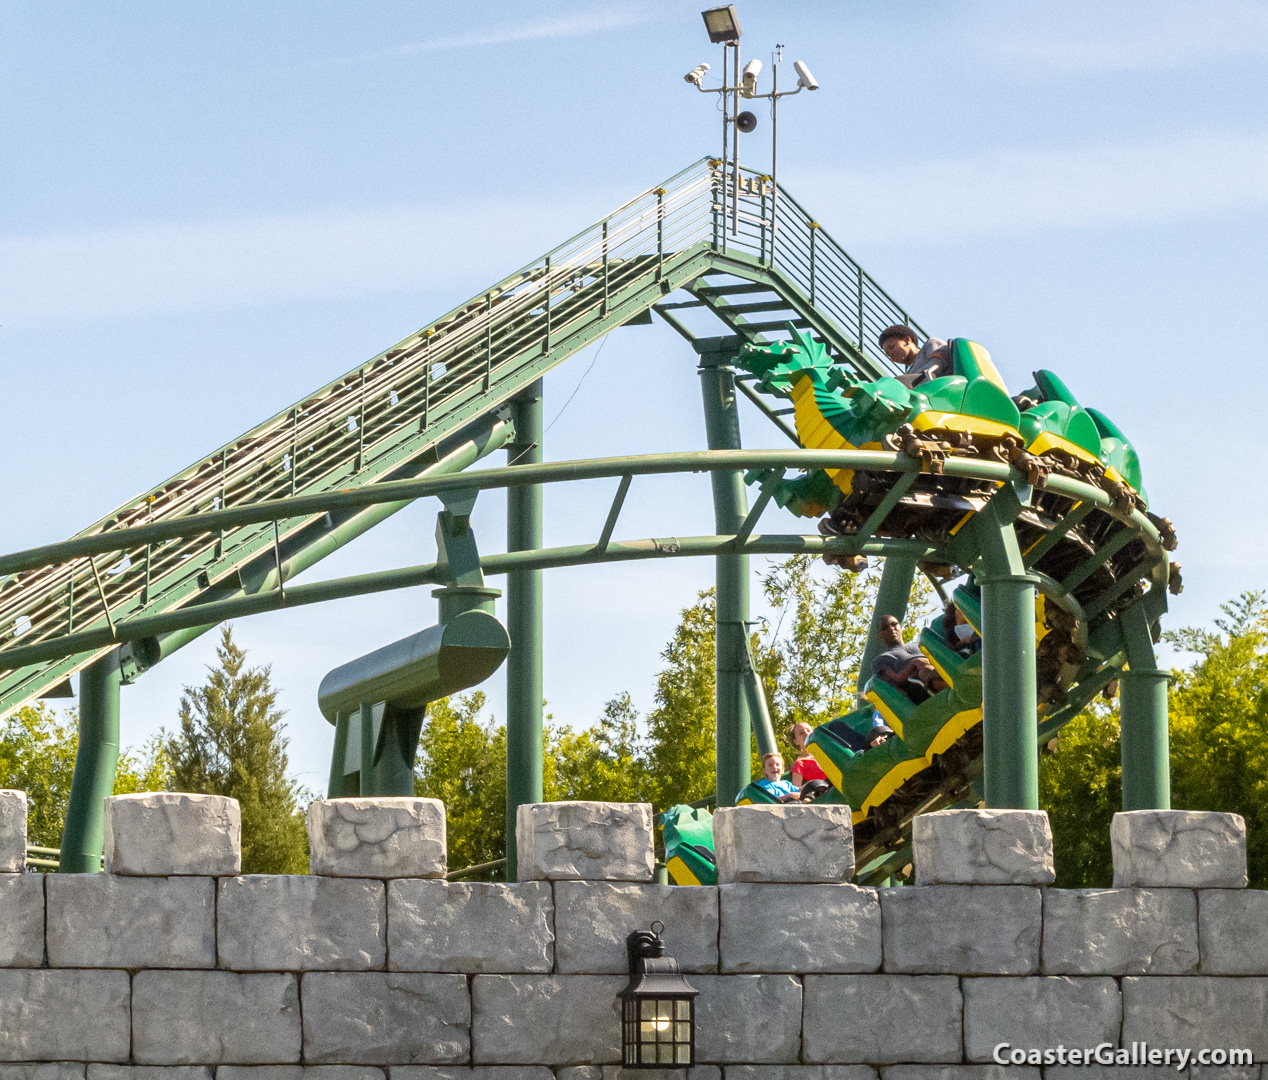 How a Cypress Gardens roller coaster was converted into a Legoland coaster